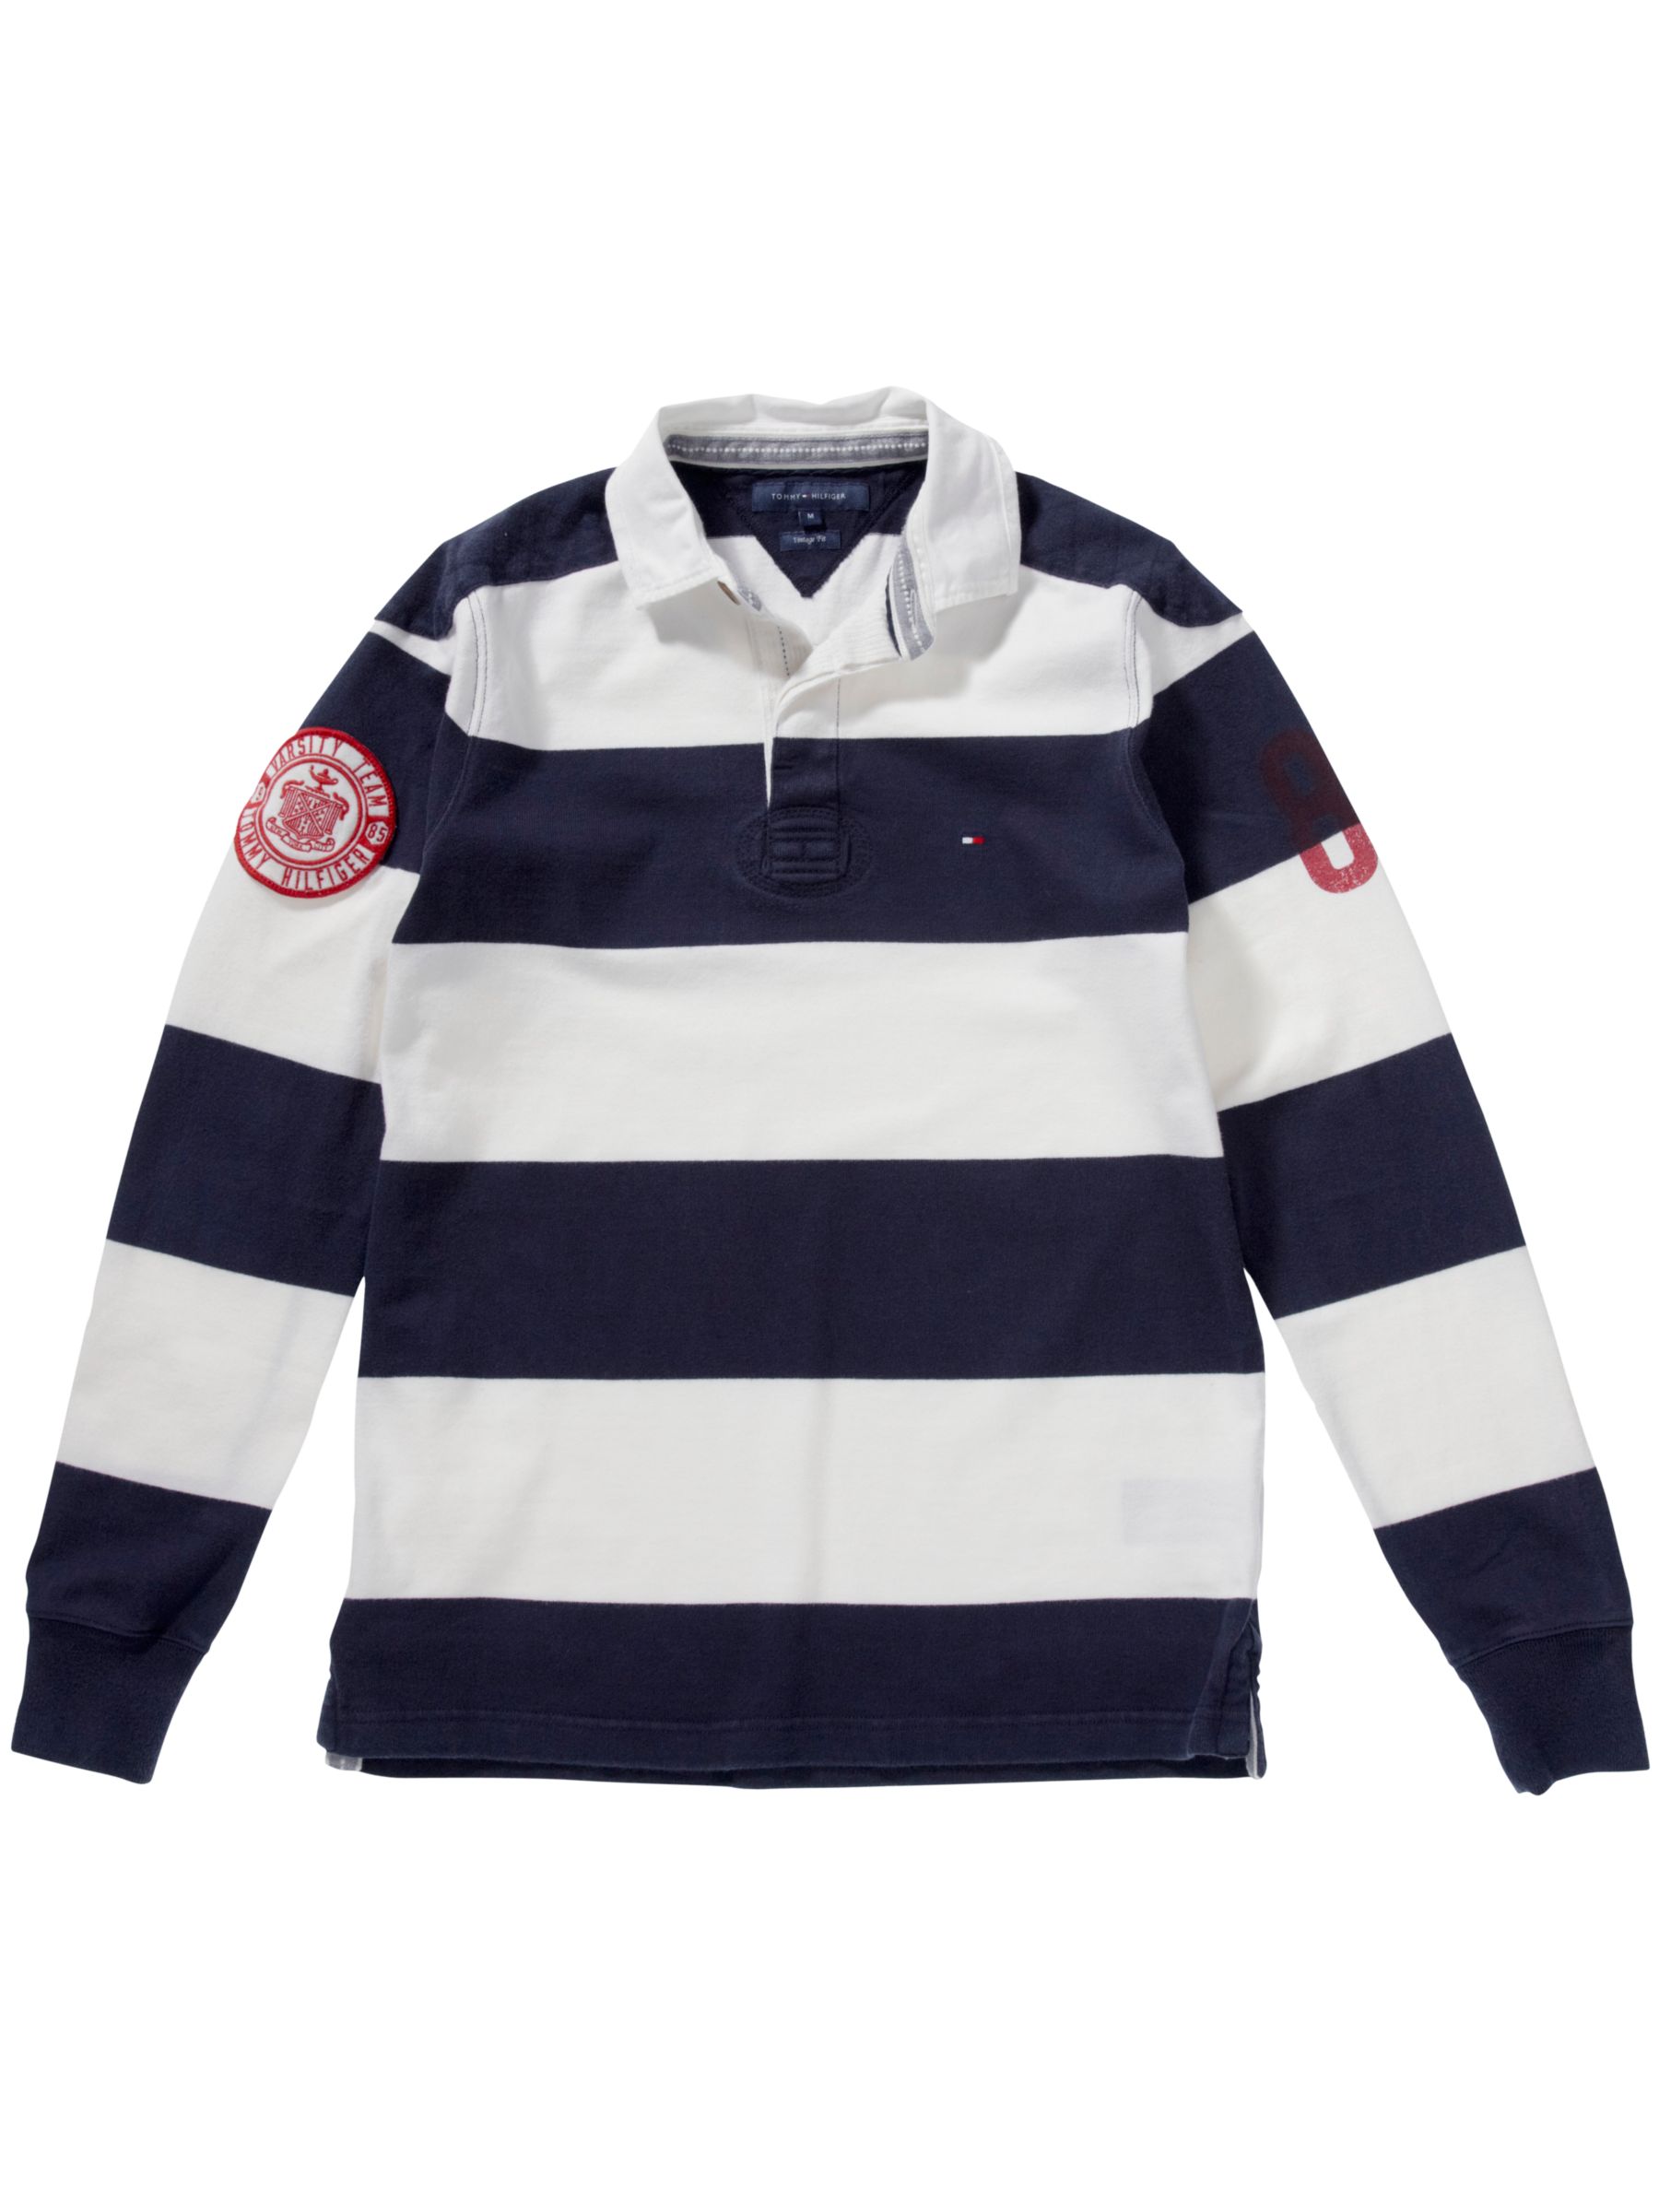 Tommy Hilfiger Dandy Stripe Rugby Shirt,